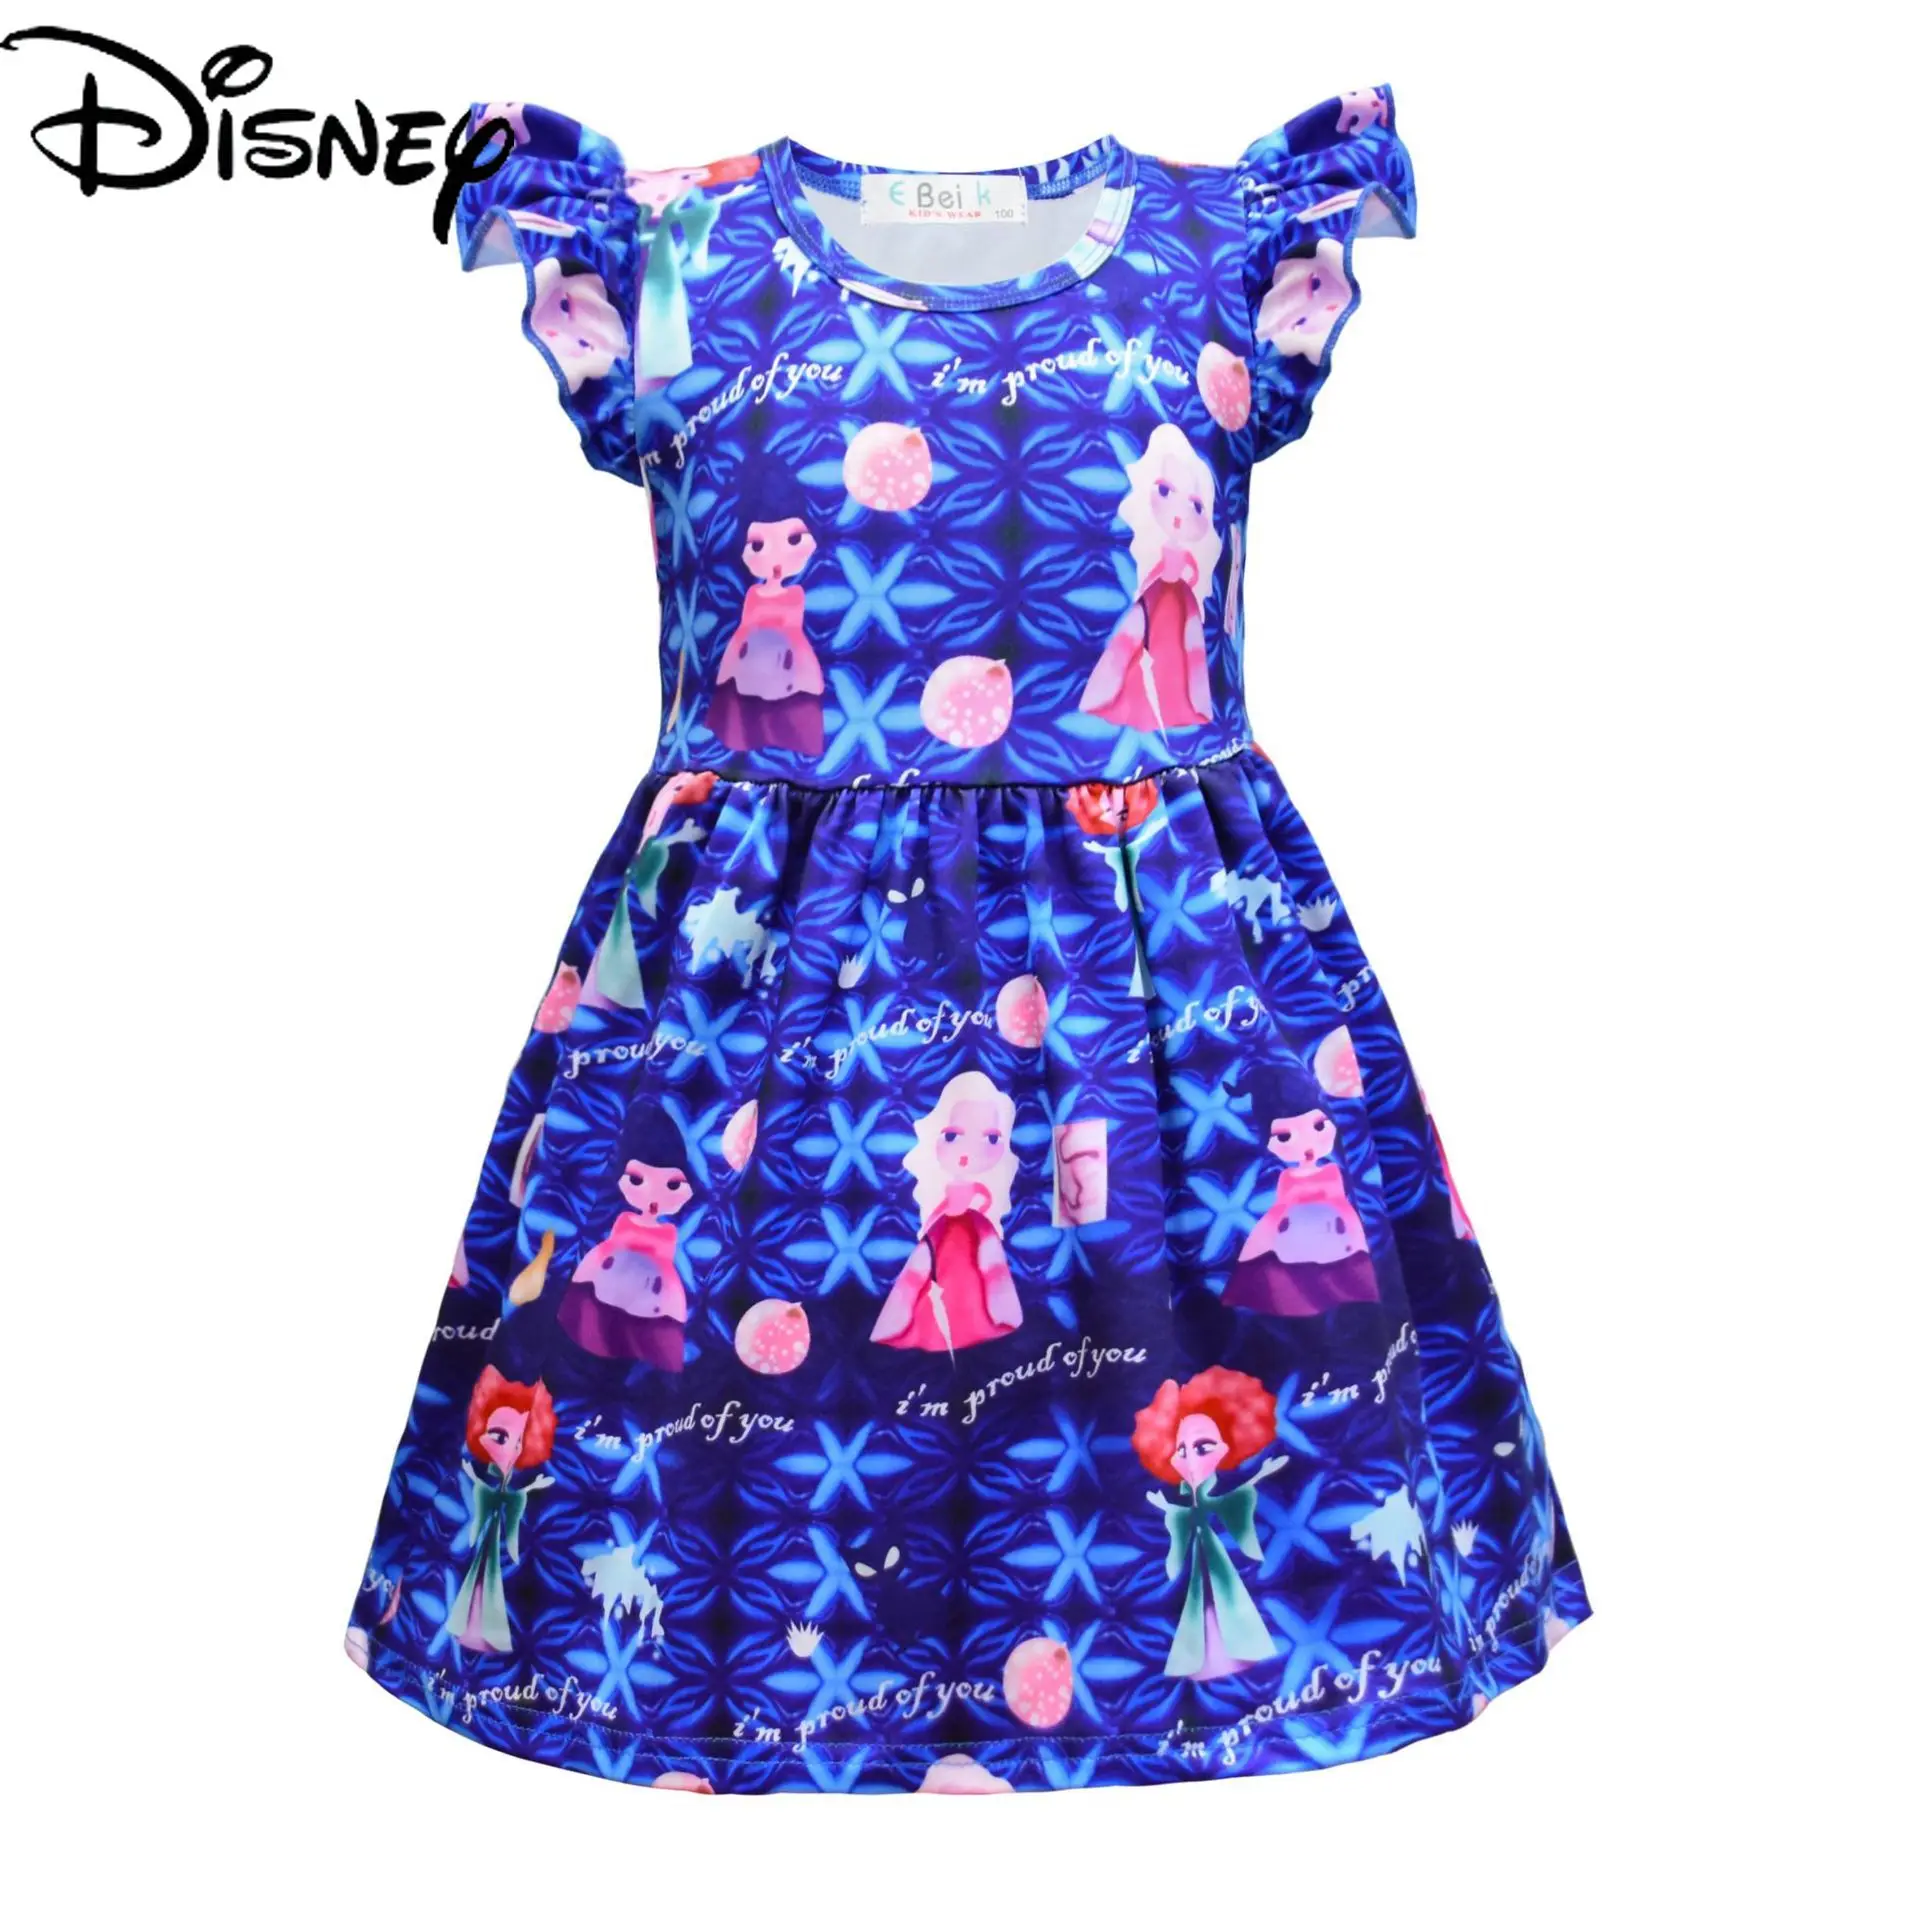 

Disney Frozen Cozy Princess Dress Aisha Princess Dress Milk Silk Flying Sleeve Girls Pajamas Dress kids dresses for girls